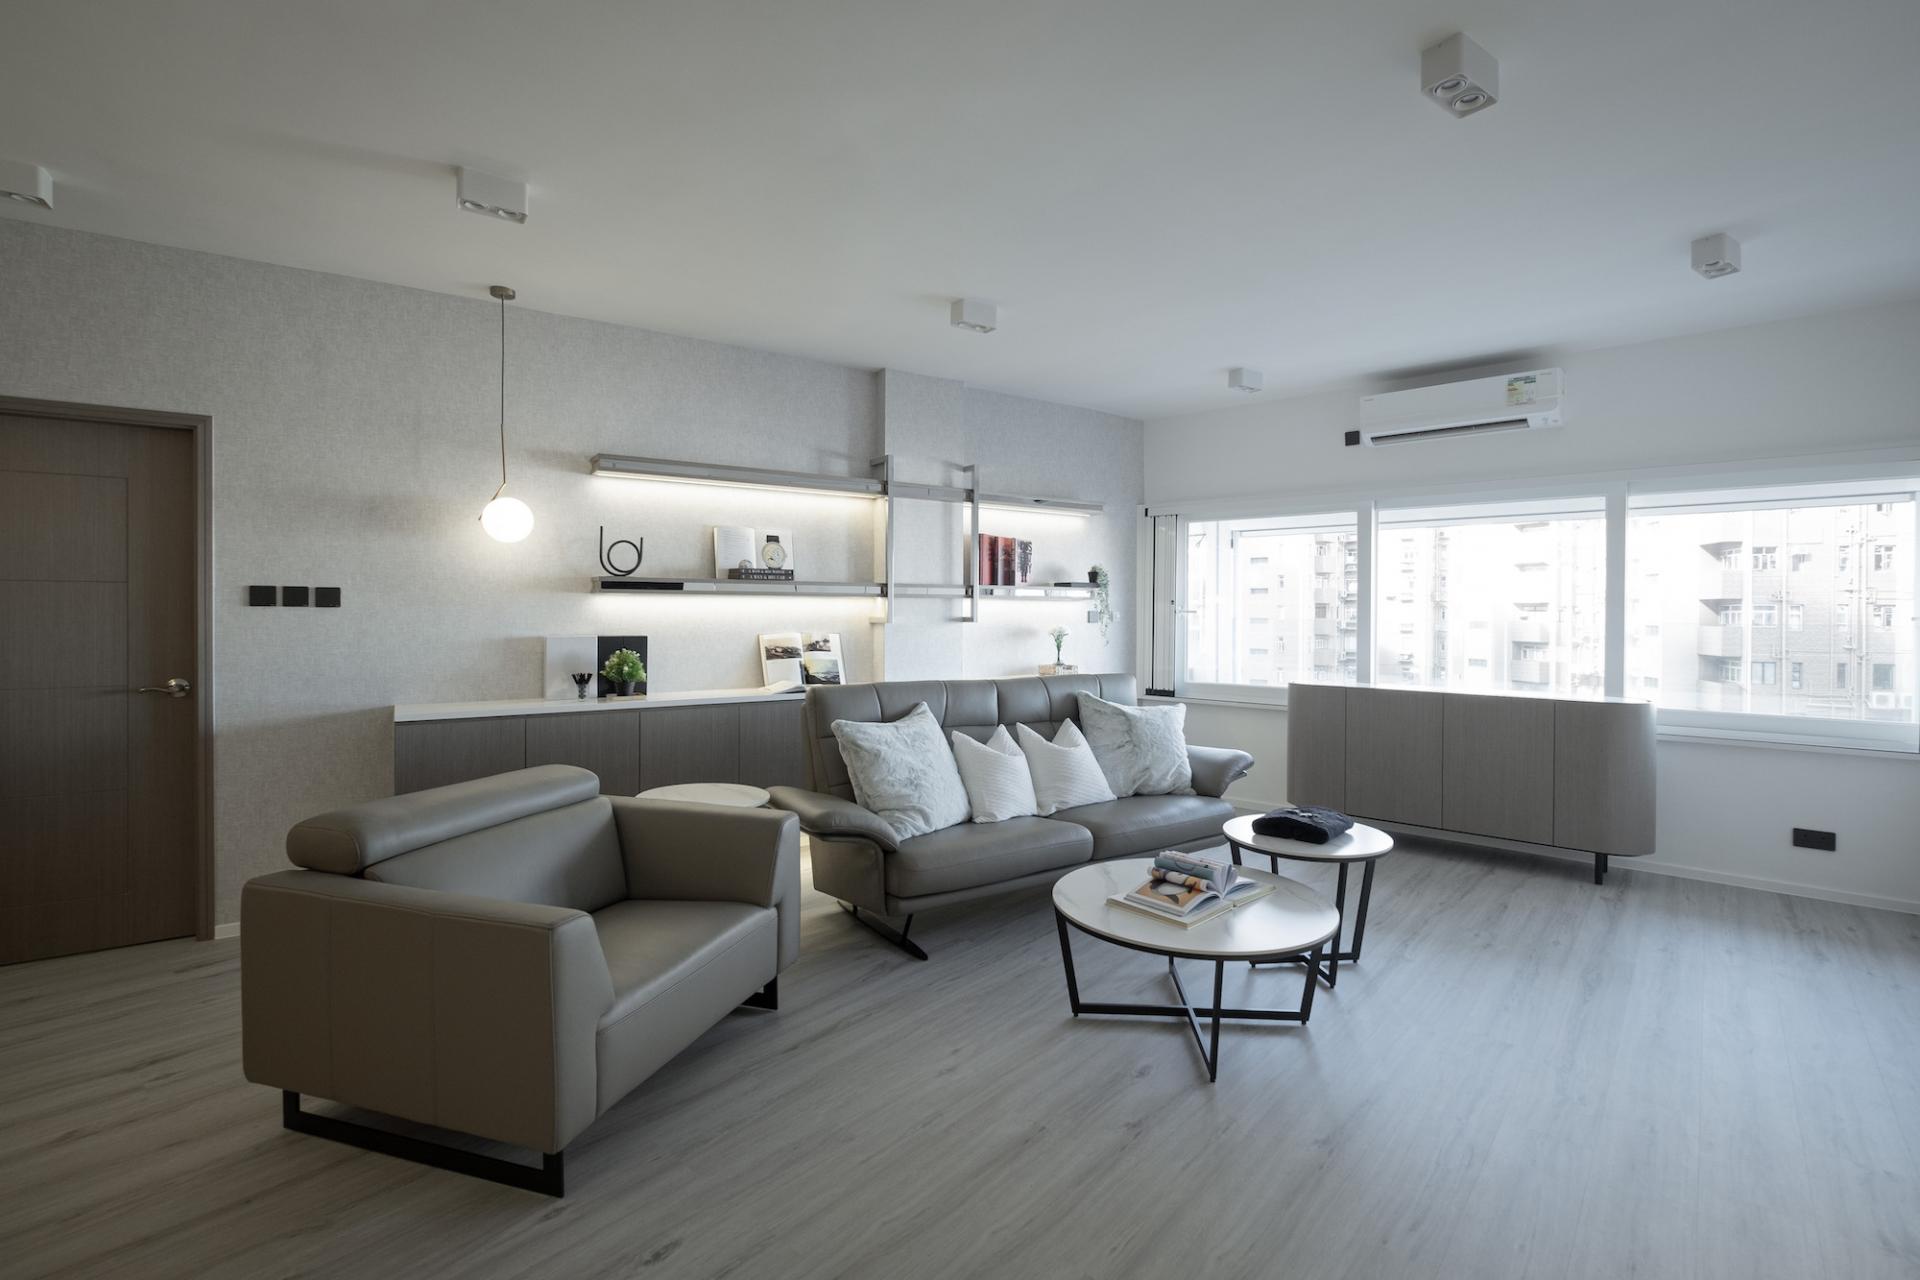 Calvin chui - CNS Interior Design Co. Limited - Hilltop Mansion